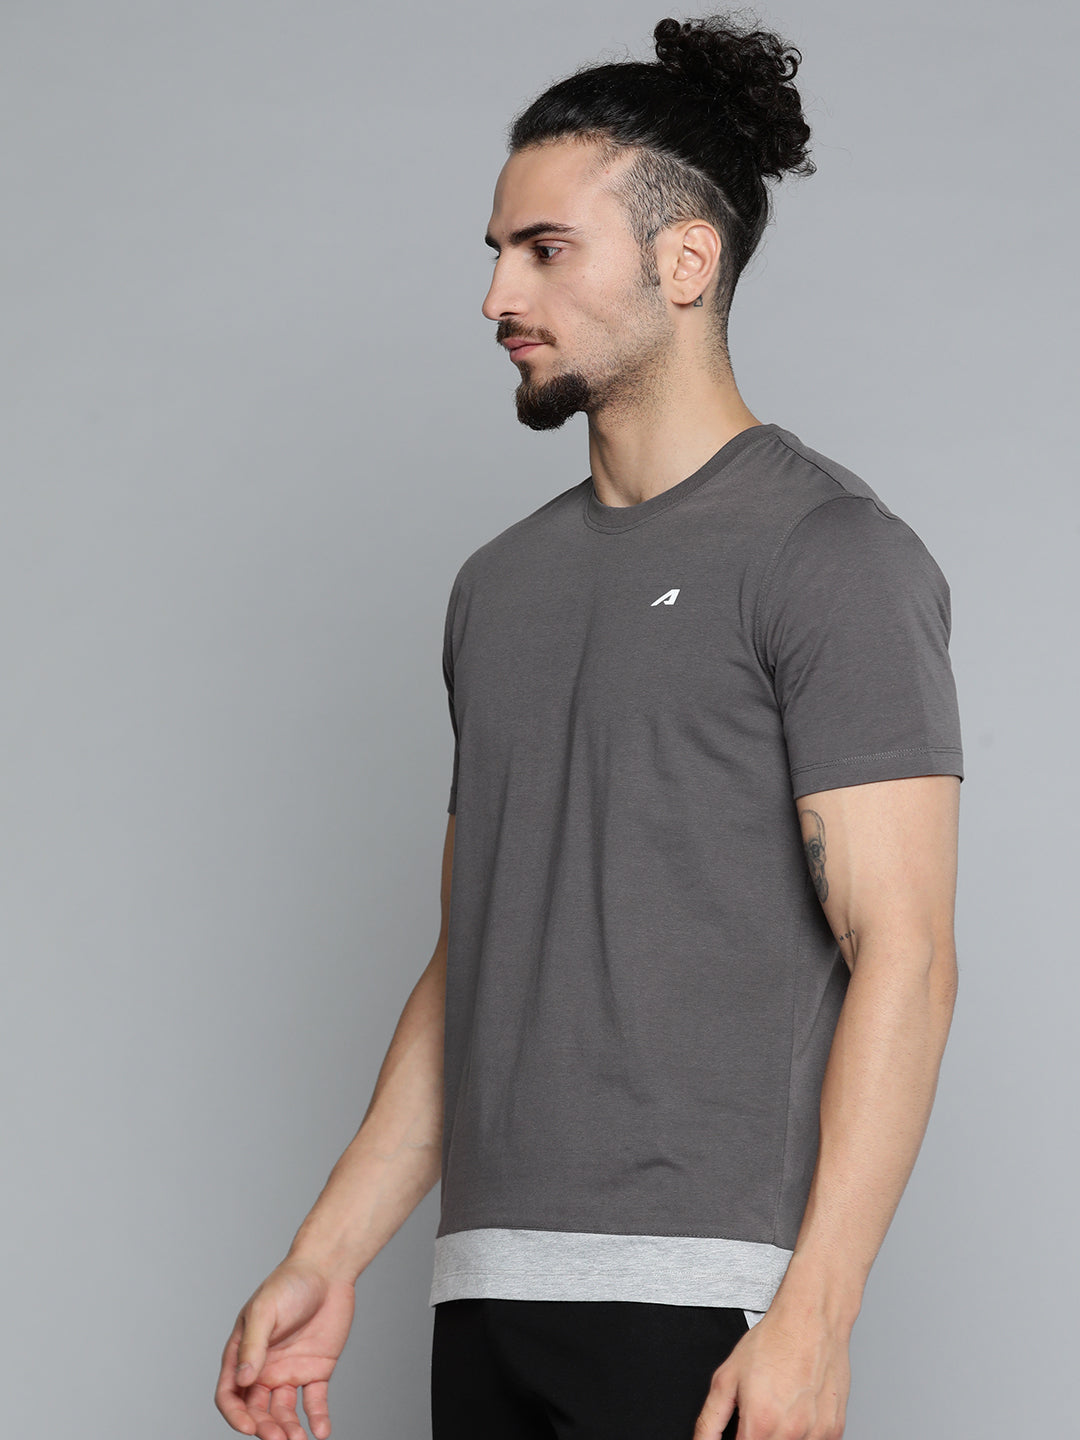 Alcis Men Grey  White Printed Slim Fit Training or Gym T-shirt